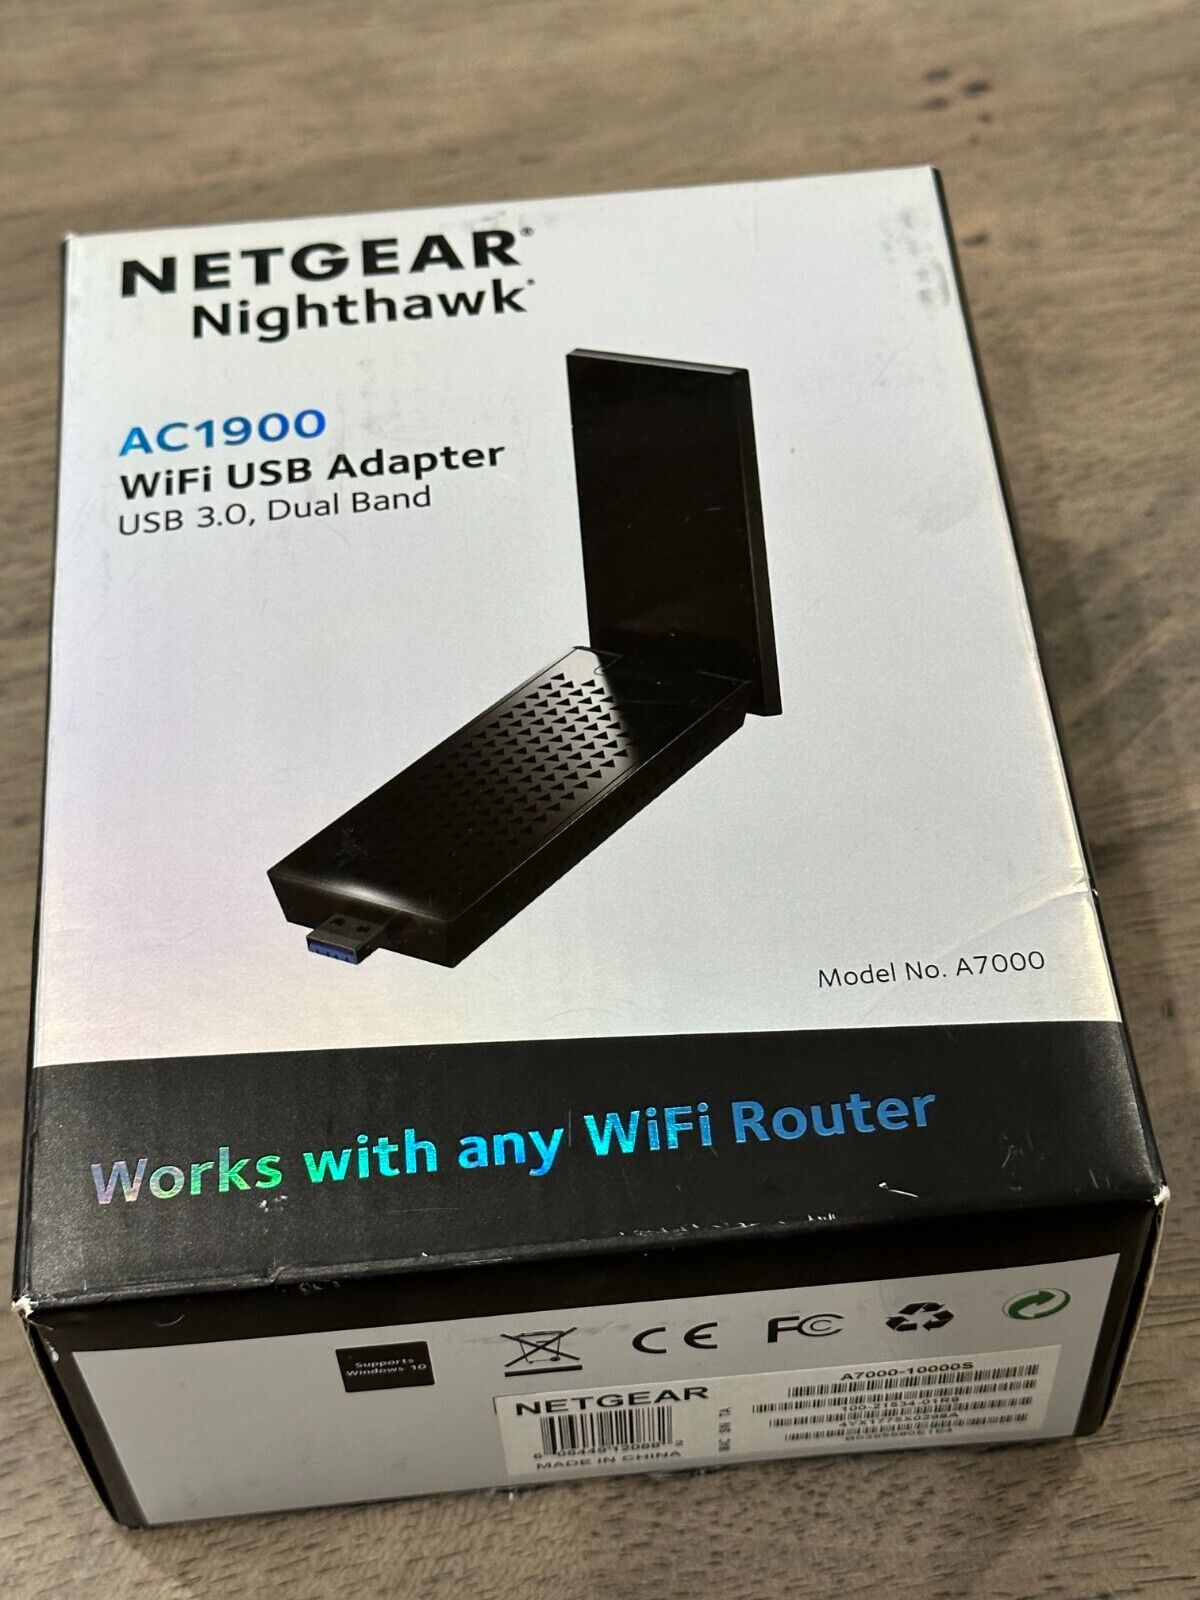 Netgear A7000 Nighthawk AC1900 WiFi USB Adapter A7000-10000S